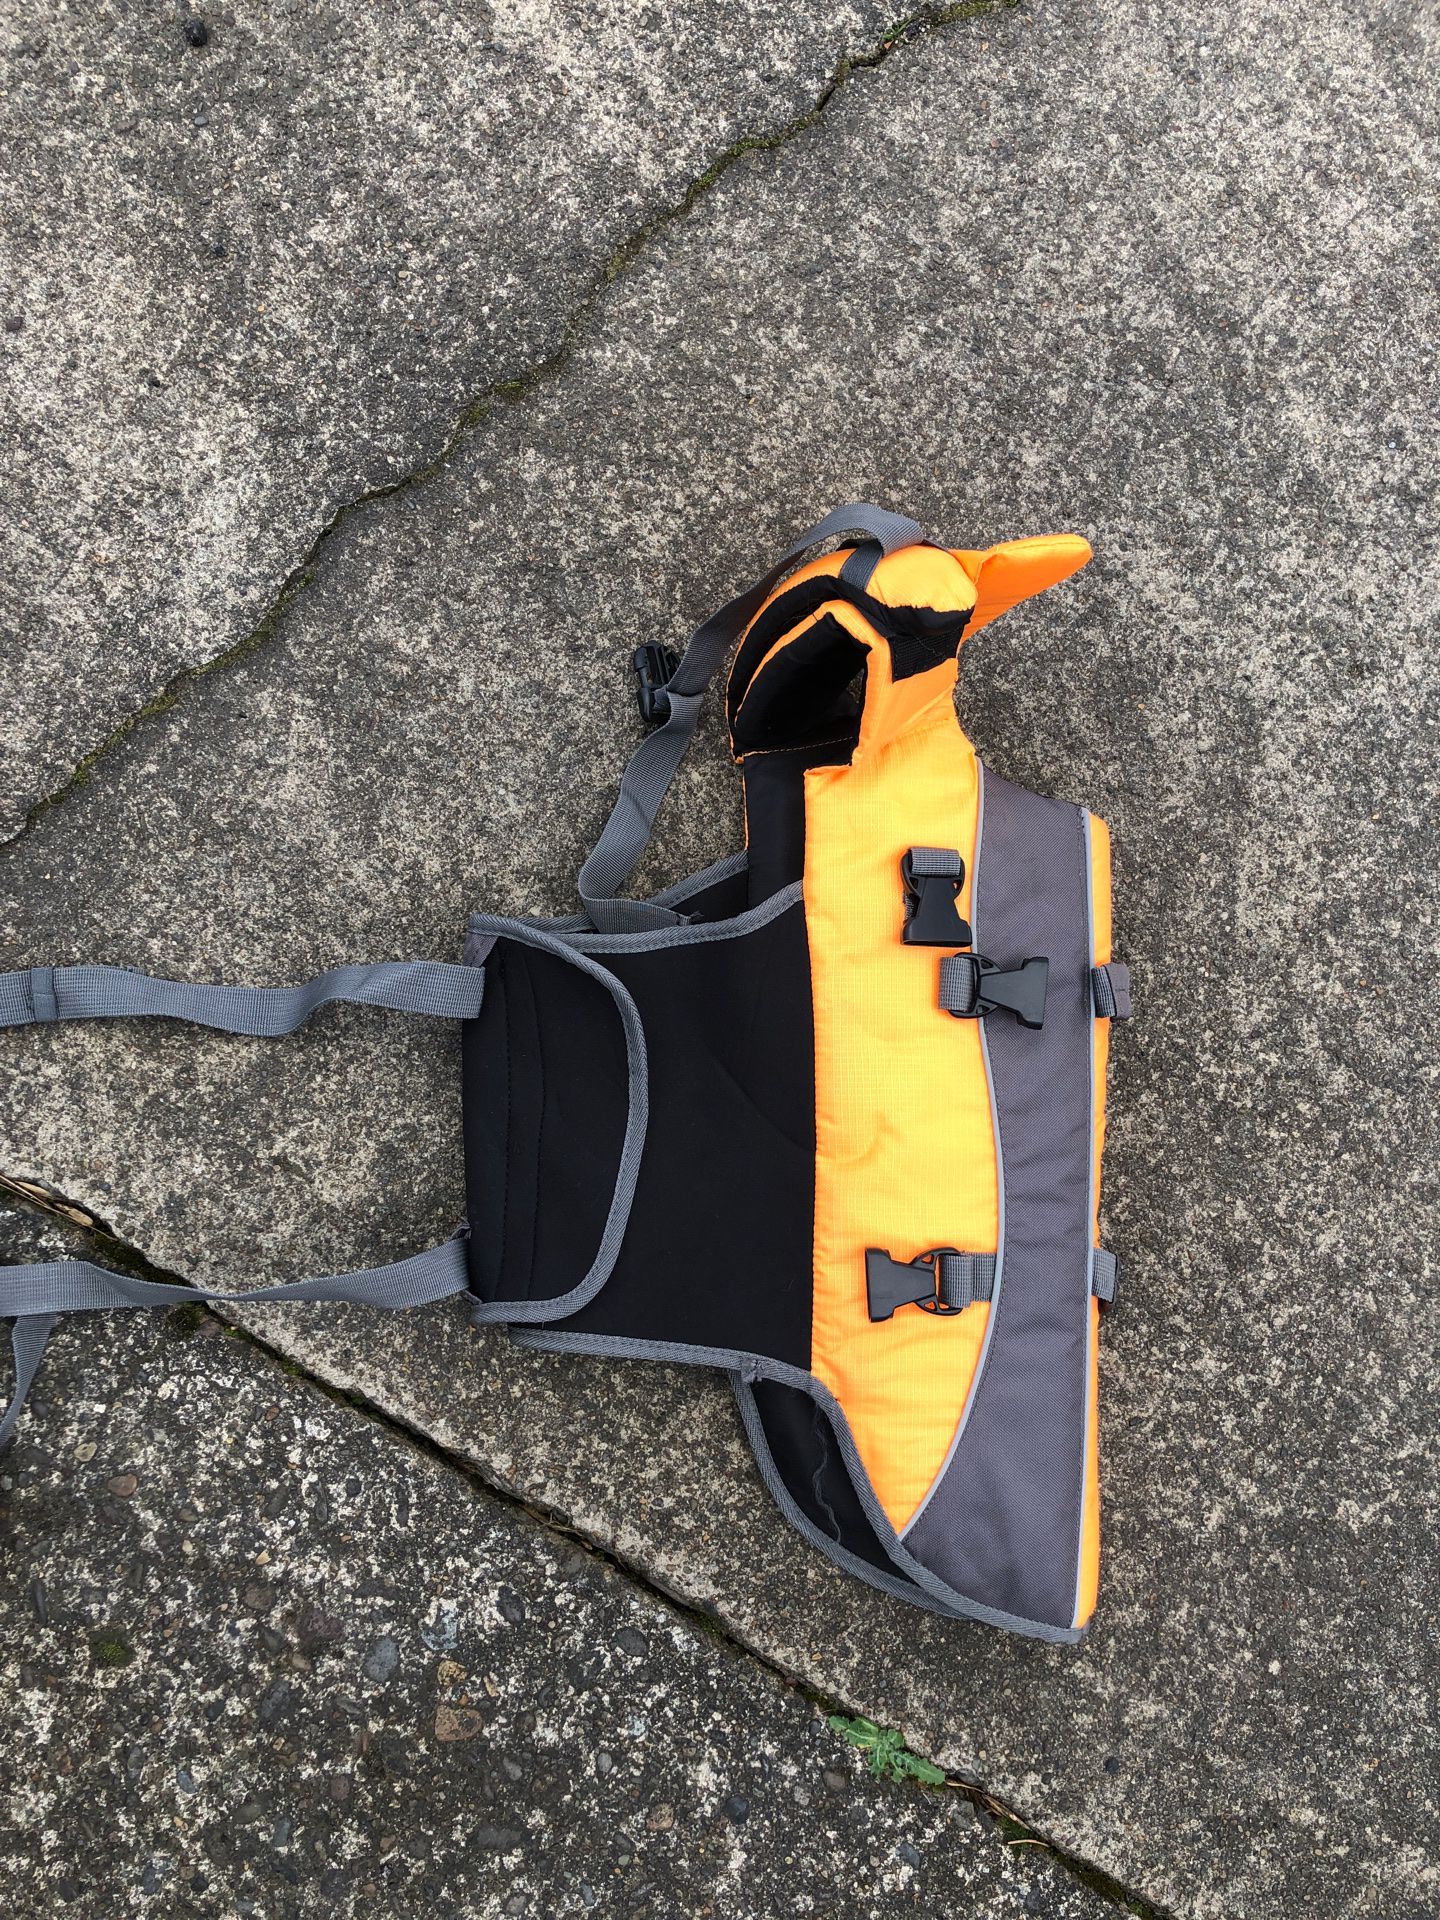 K9 life jacket/flotation vest